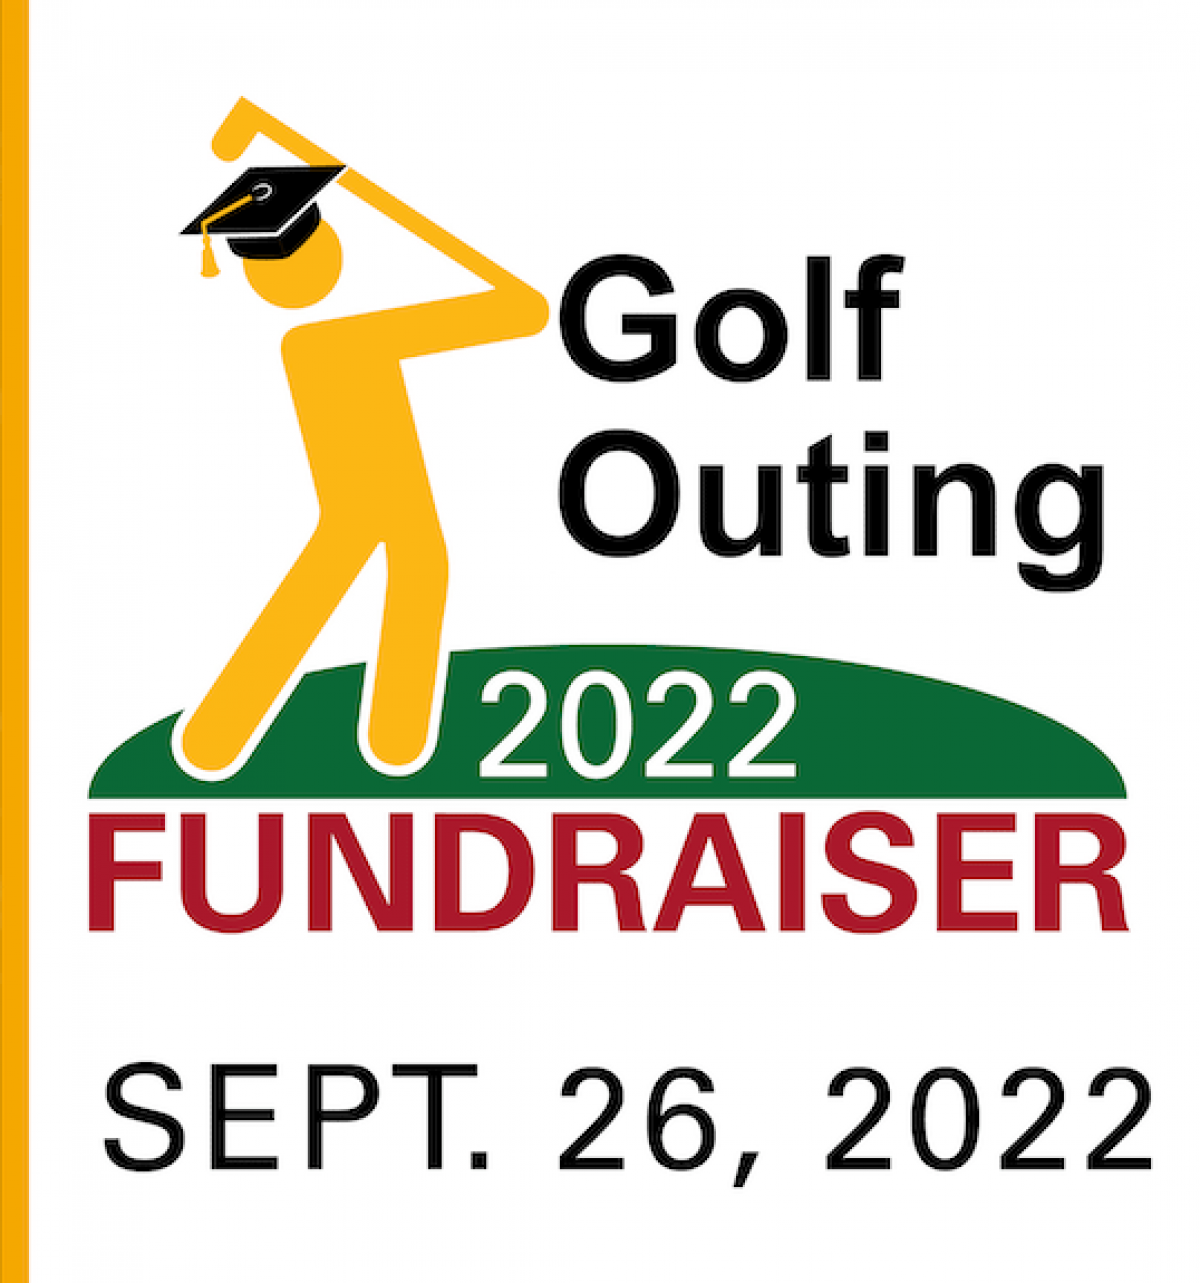 Golf Outing Fundraiser Sept. 26, 2022